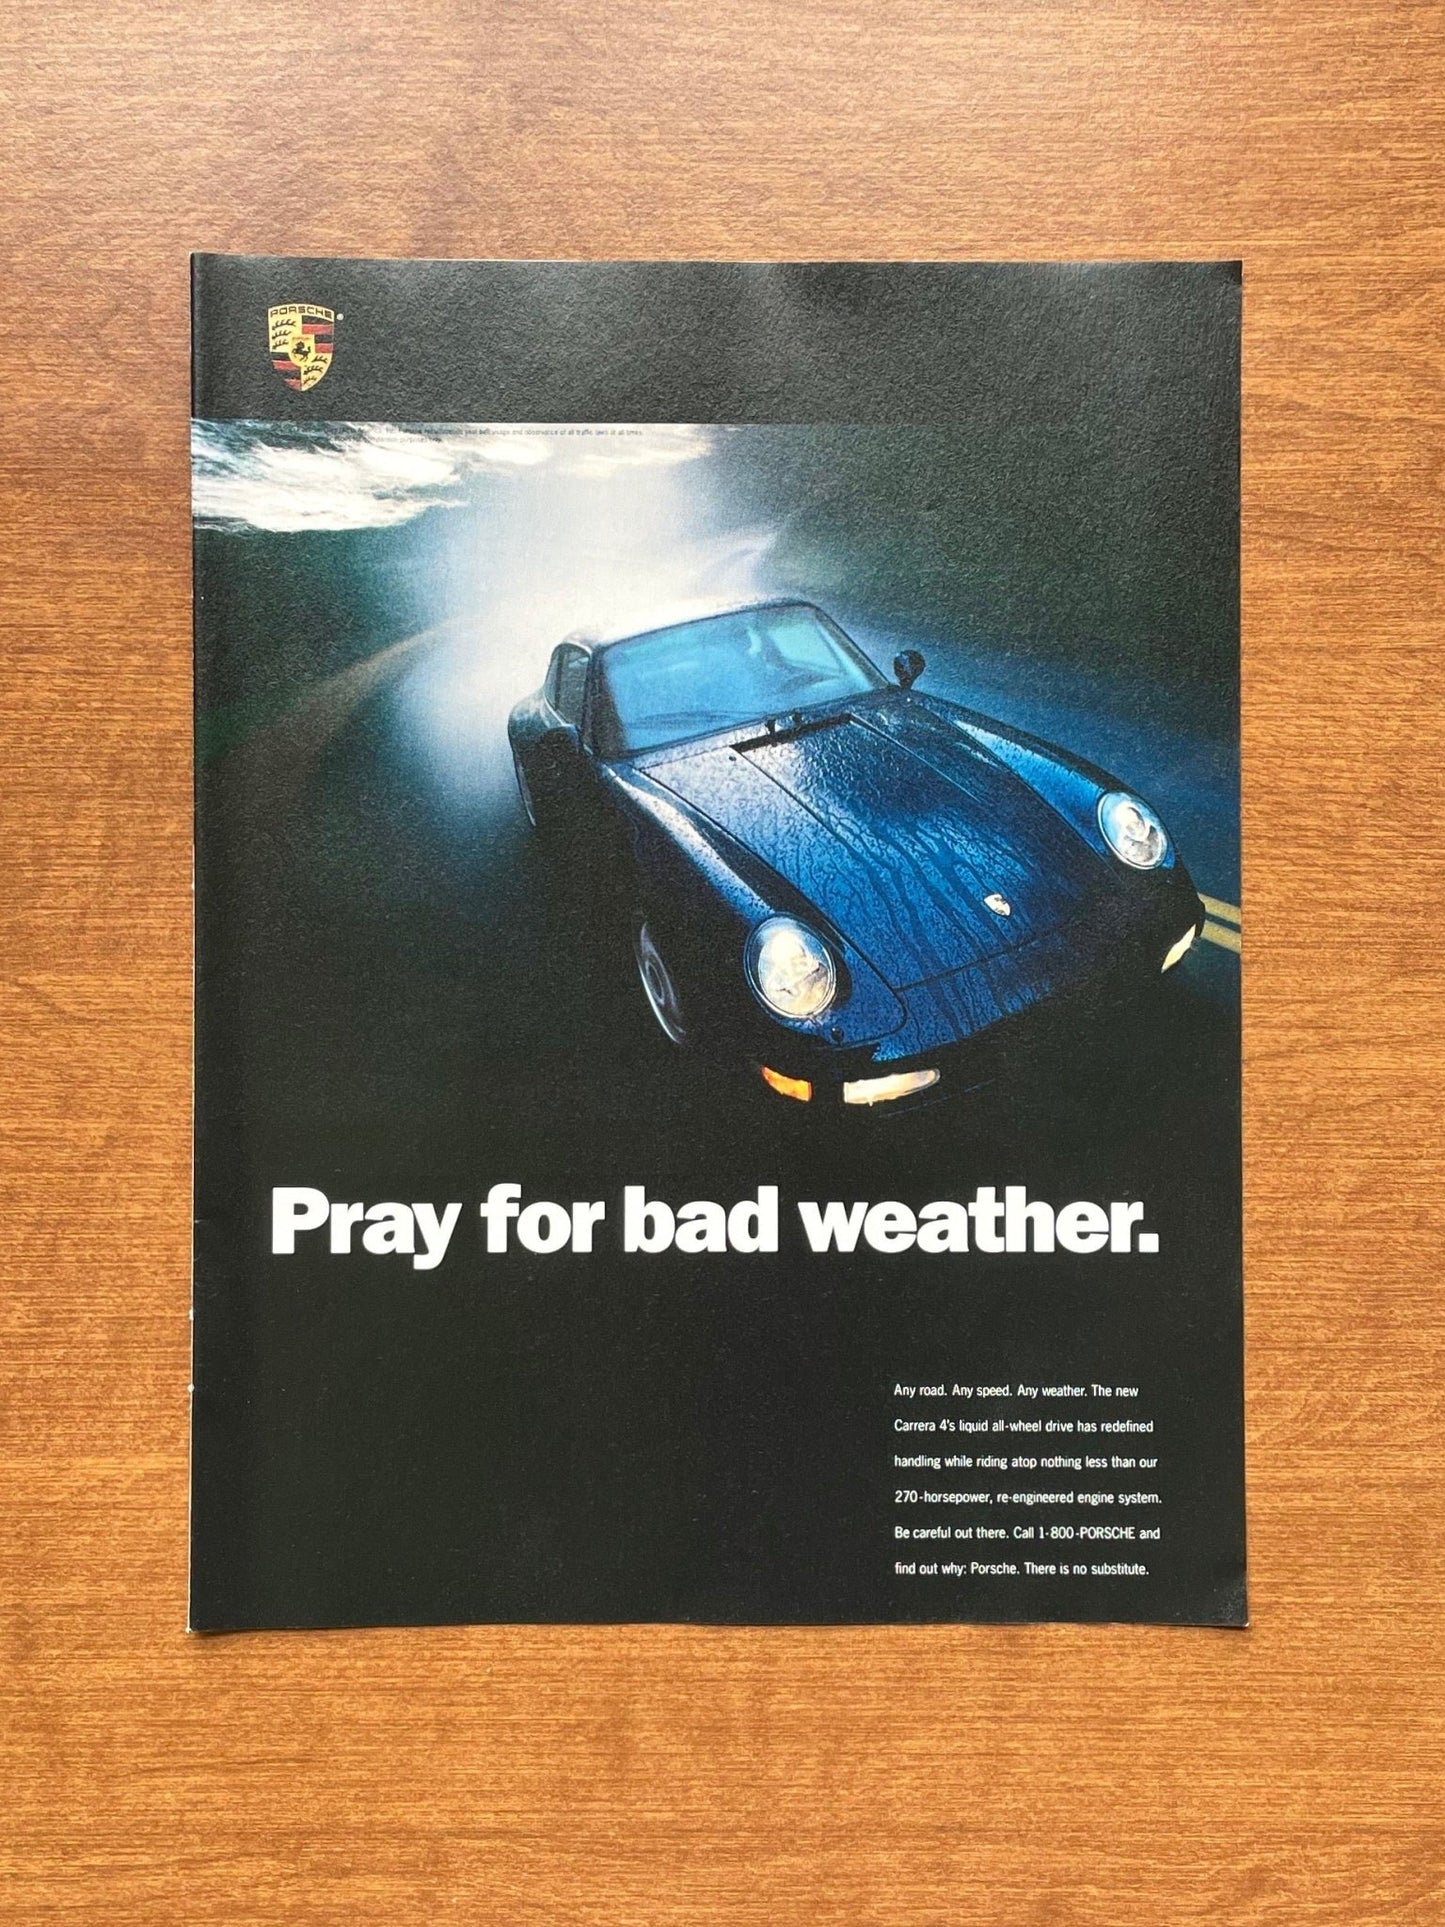 1995 Porsche Carrera 4 "Pray for bad weather." Advertisement